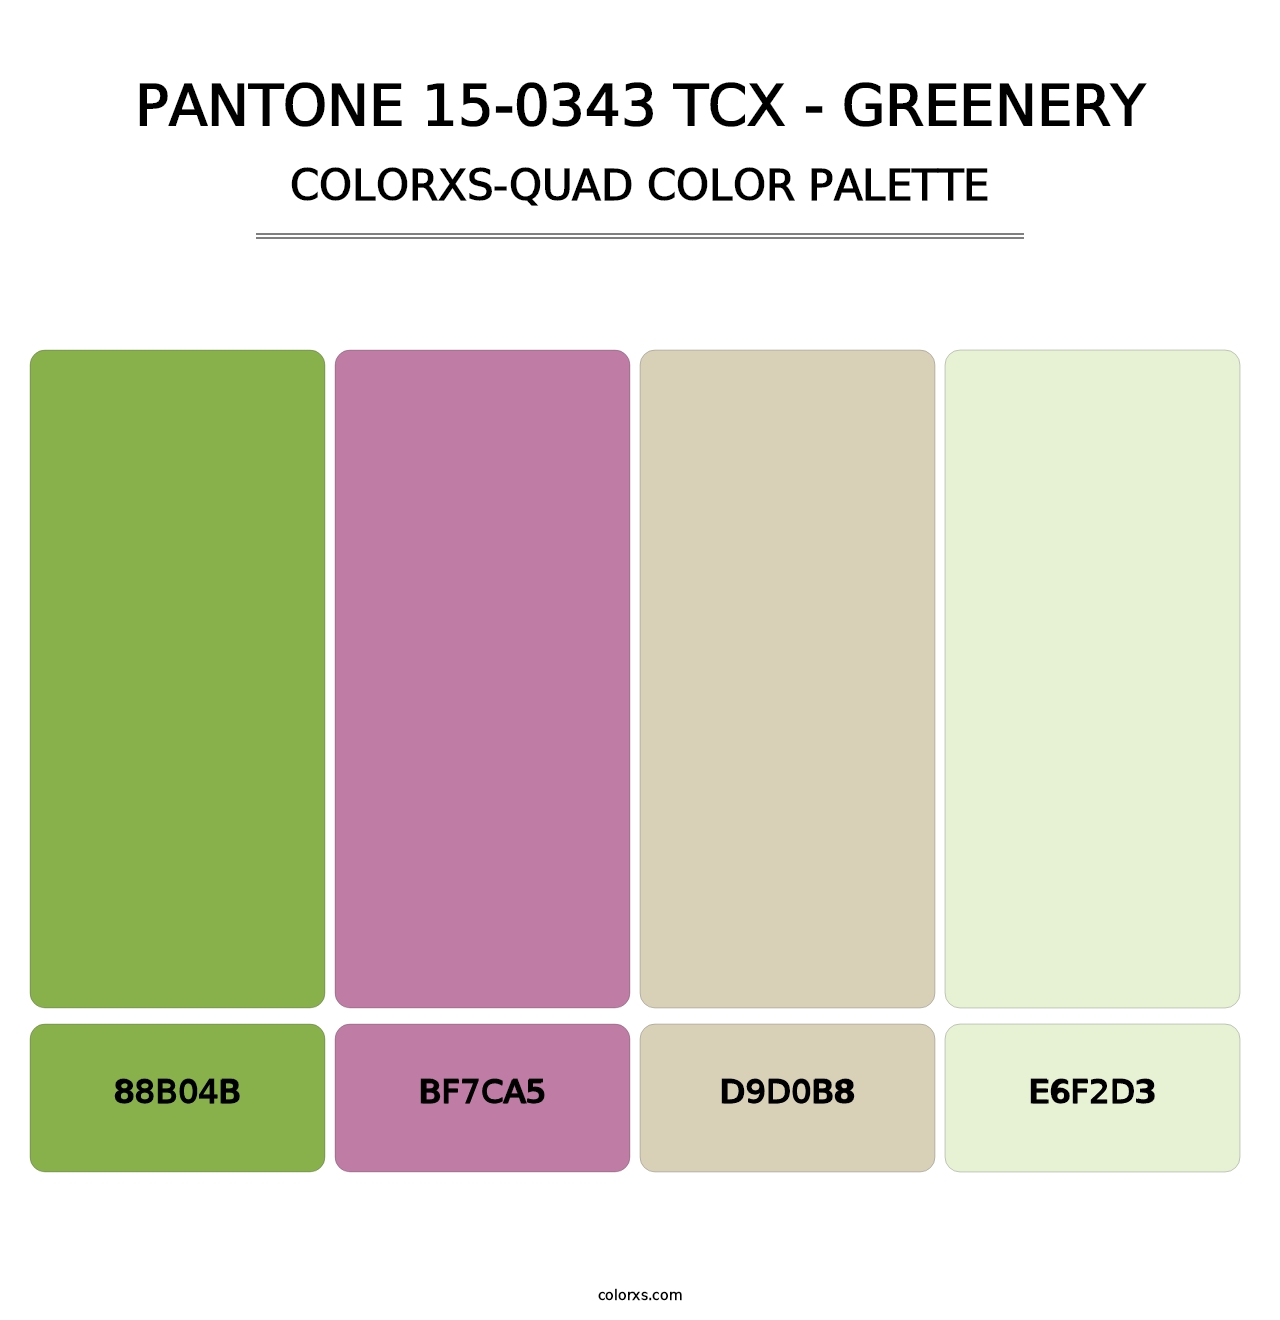 PANTONE 15-0343 TCX - Greenery - Colorxs Quad Palette